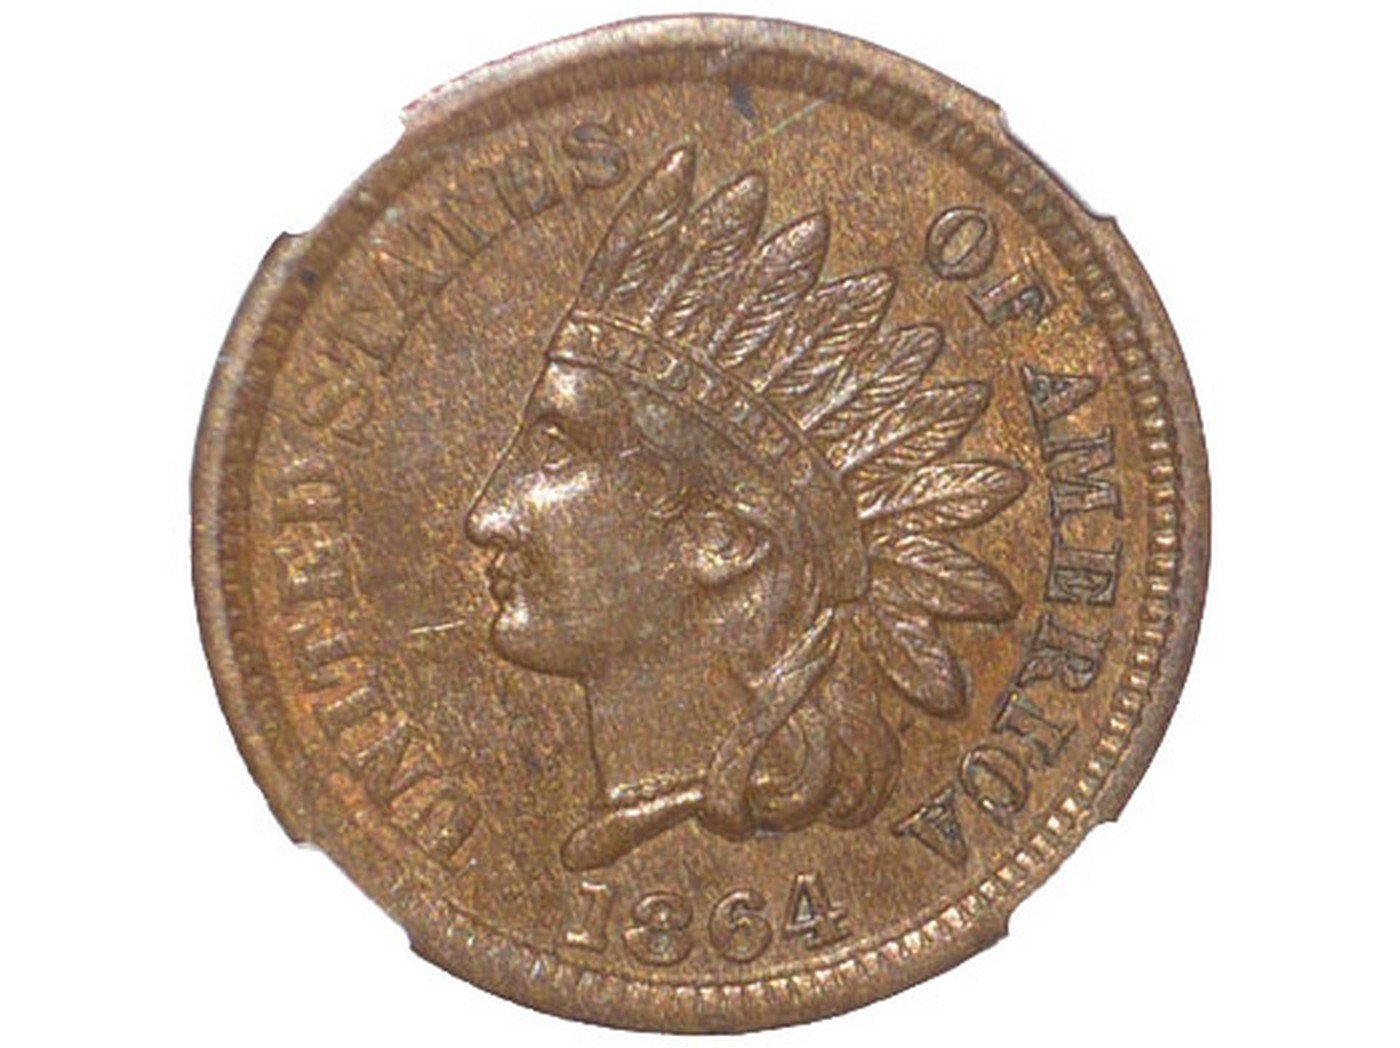 1864 No-L RPD-011 - Indian Head Penny - Photo by David Poliquin